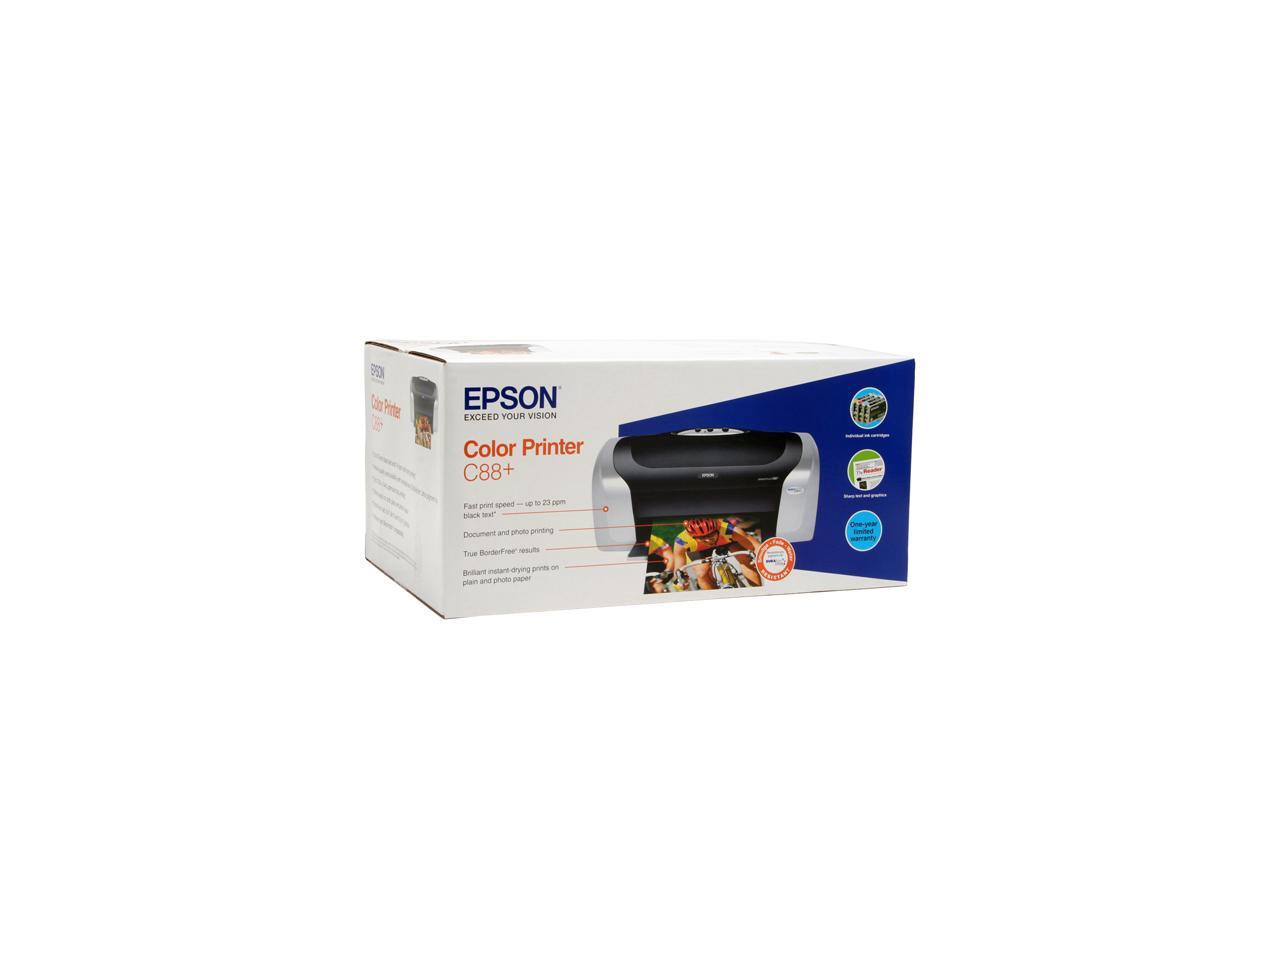 Epson Stylus C88 C11c617121f Inkjet Personal Color Printer Neweggca 9306